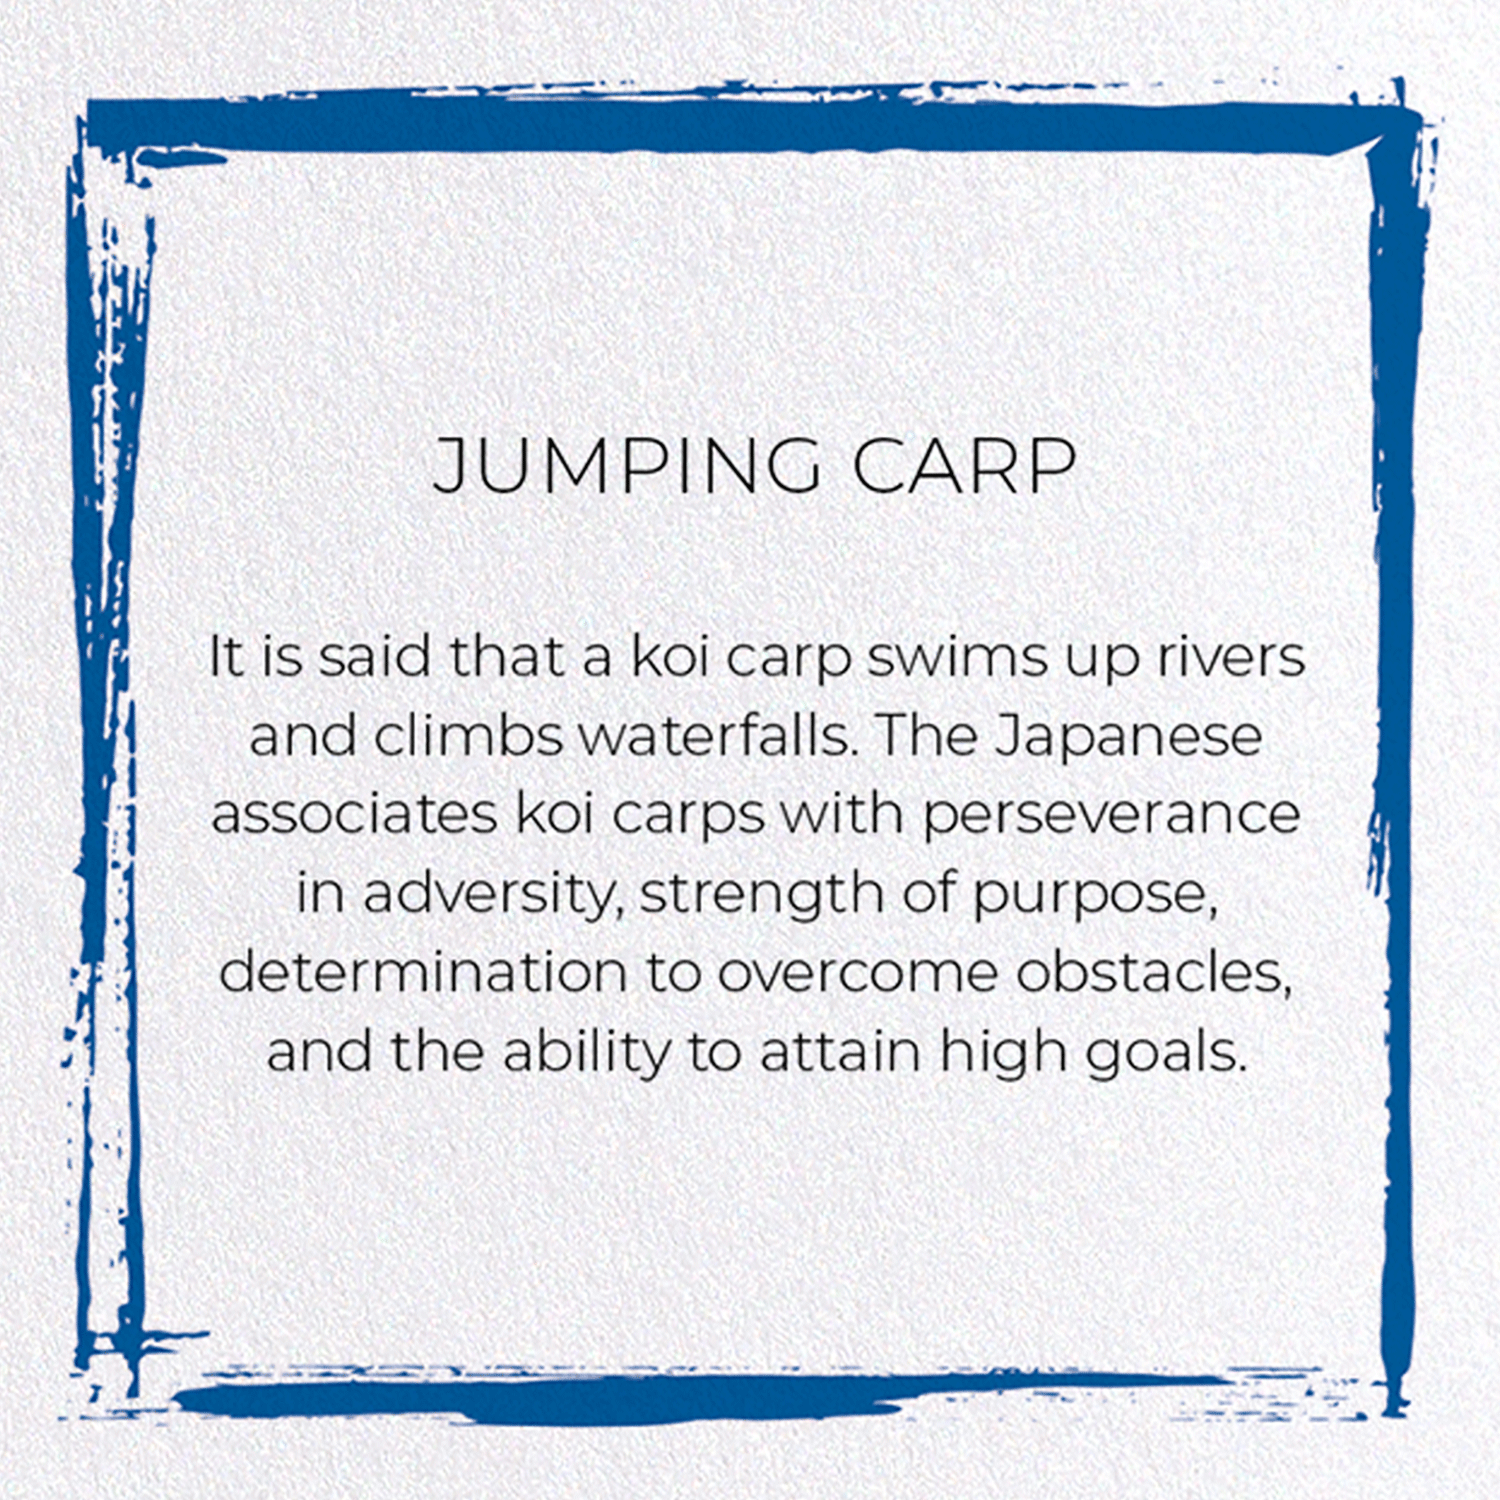 JUMPING CARP